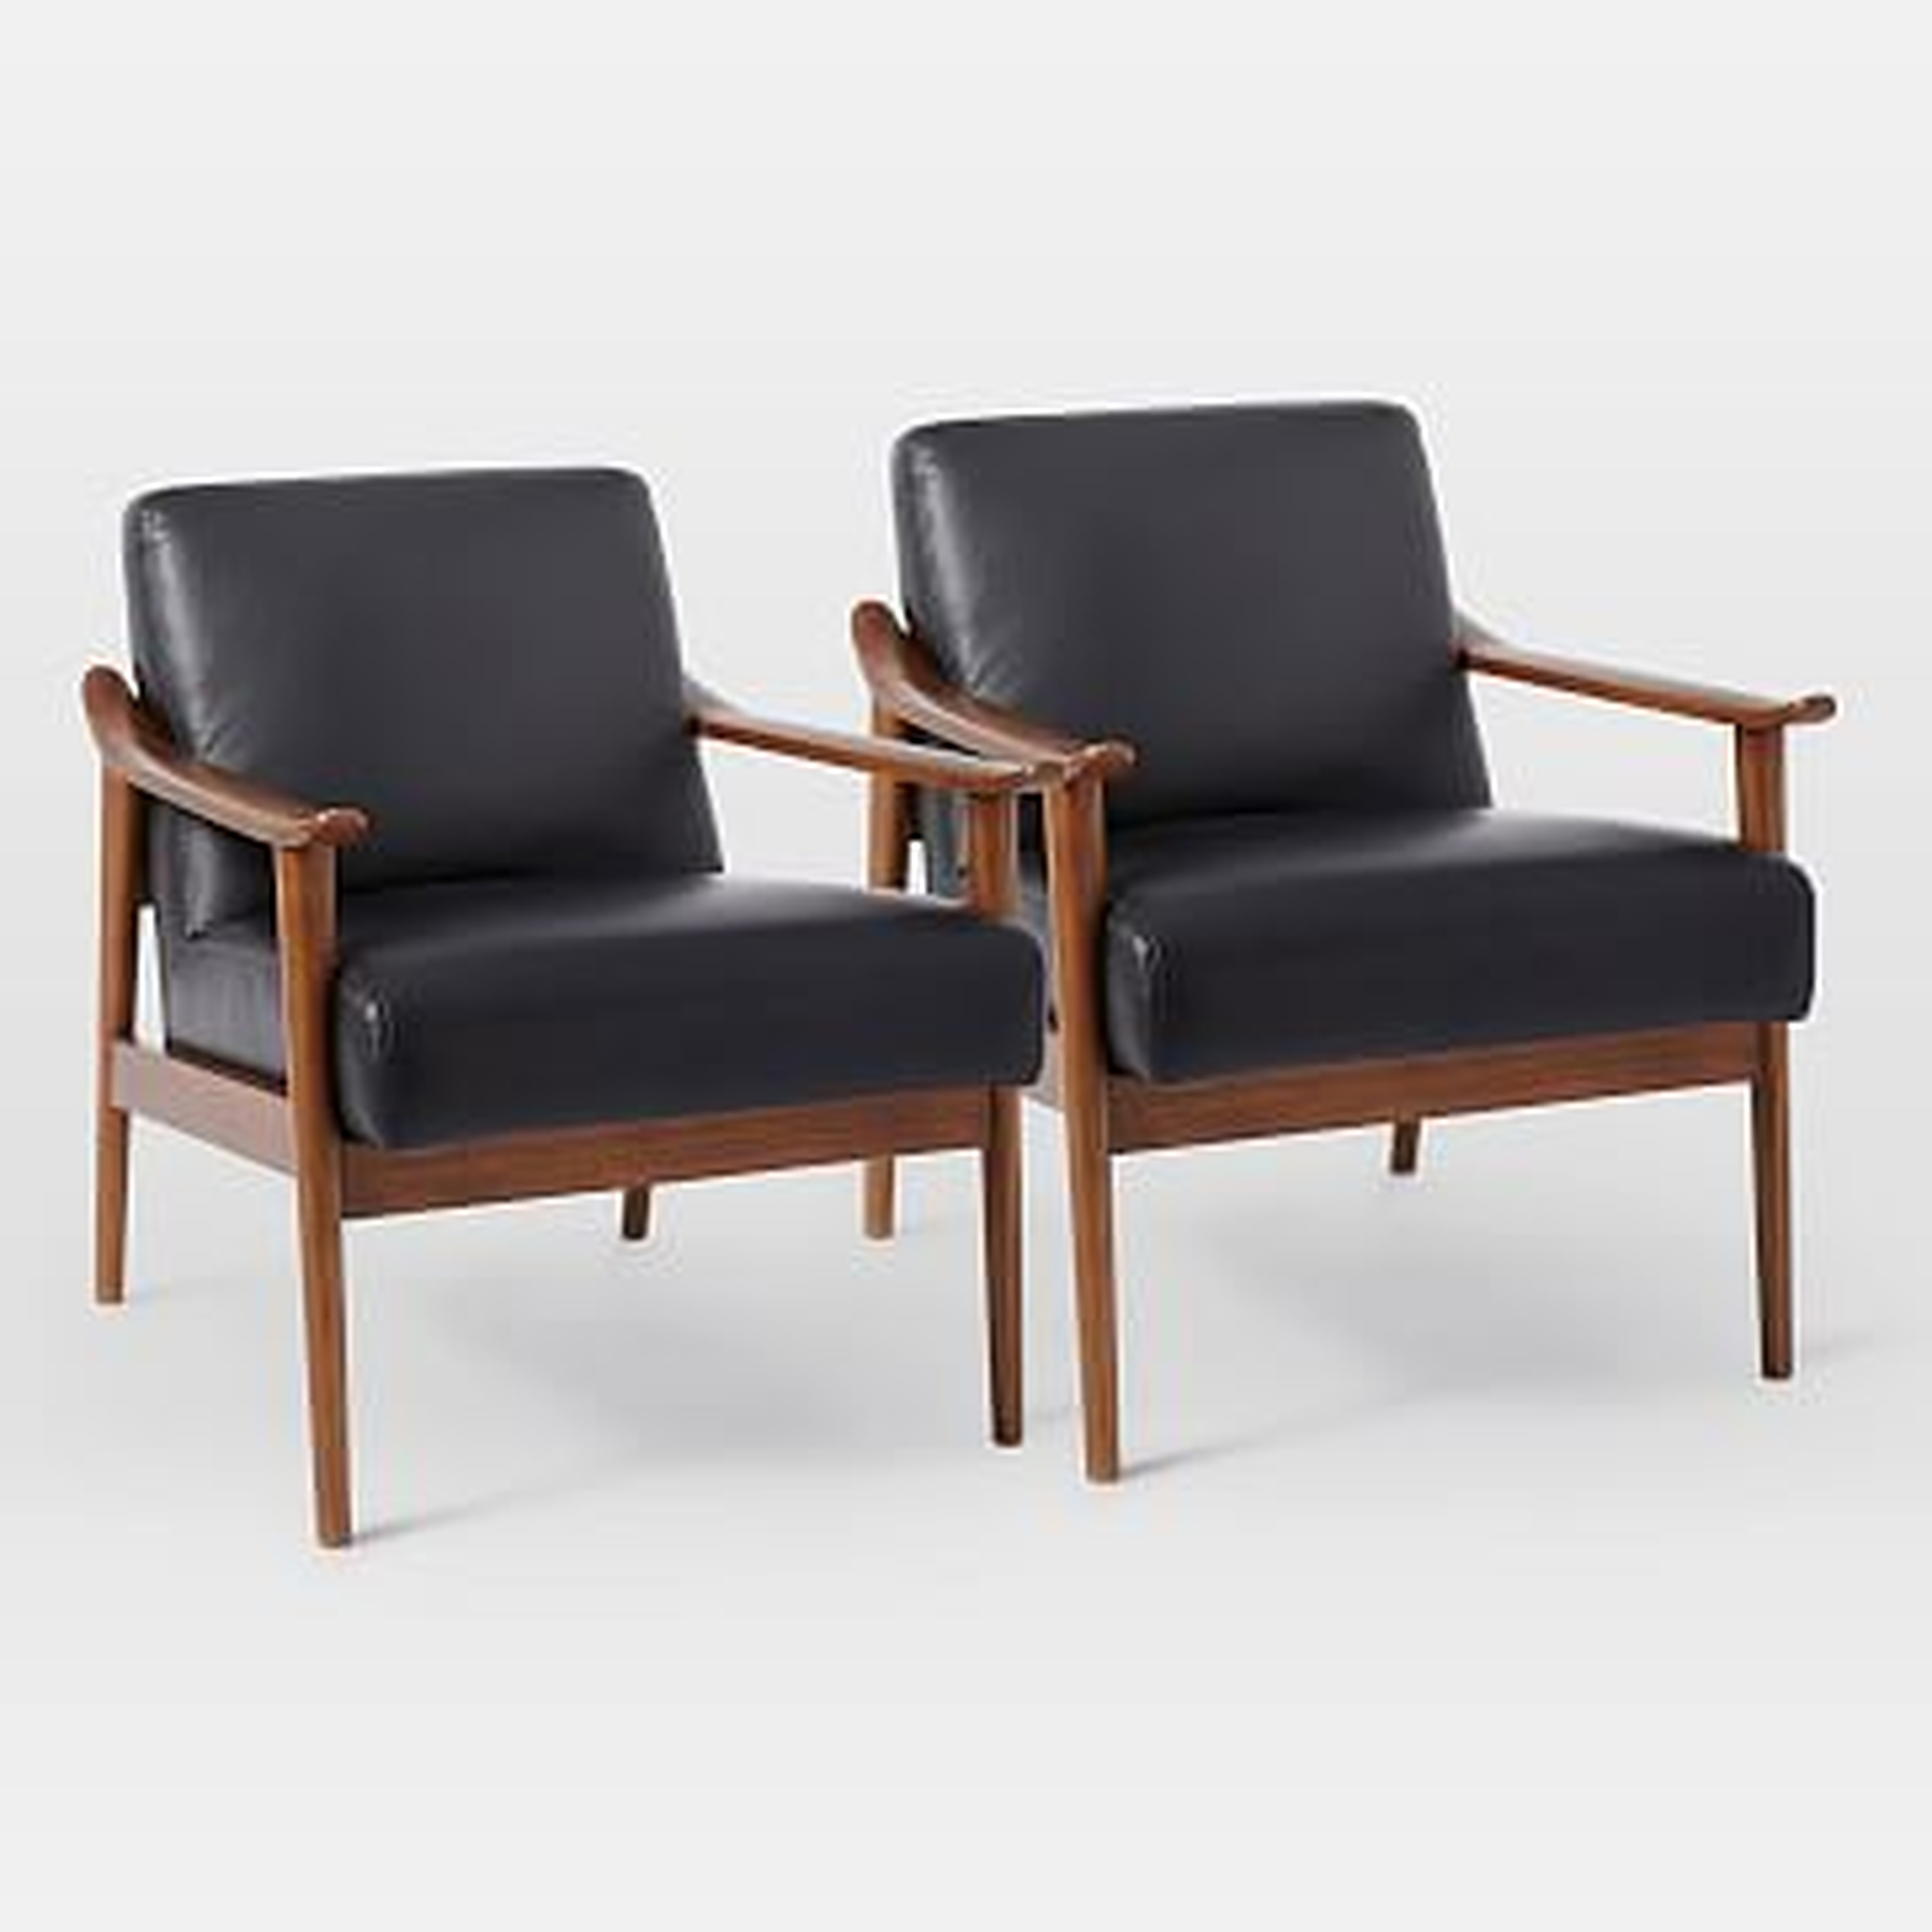 Midcentury Show Wood Leather Chair, Nero/Pecan, Set of 2 - West Elm